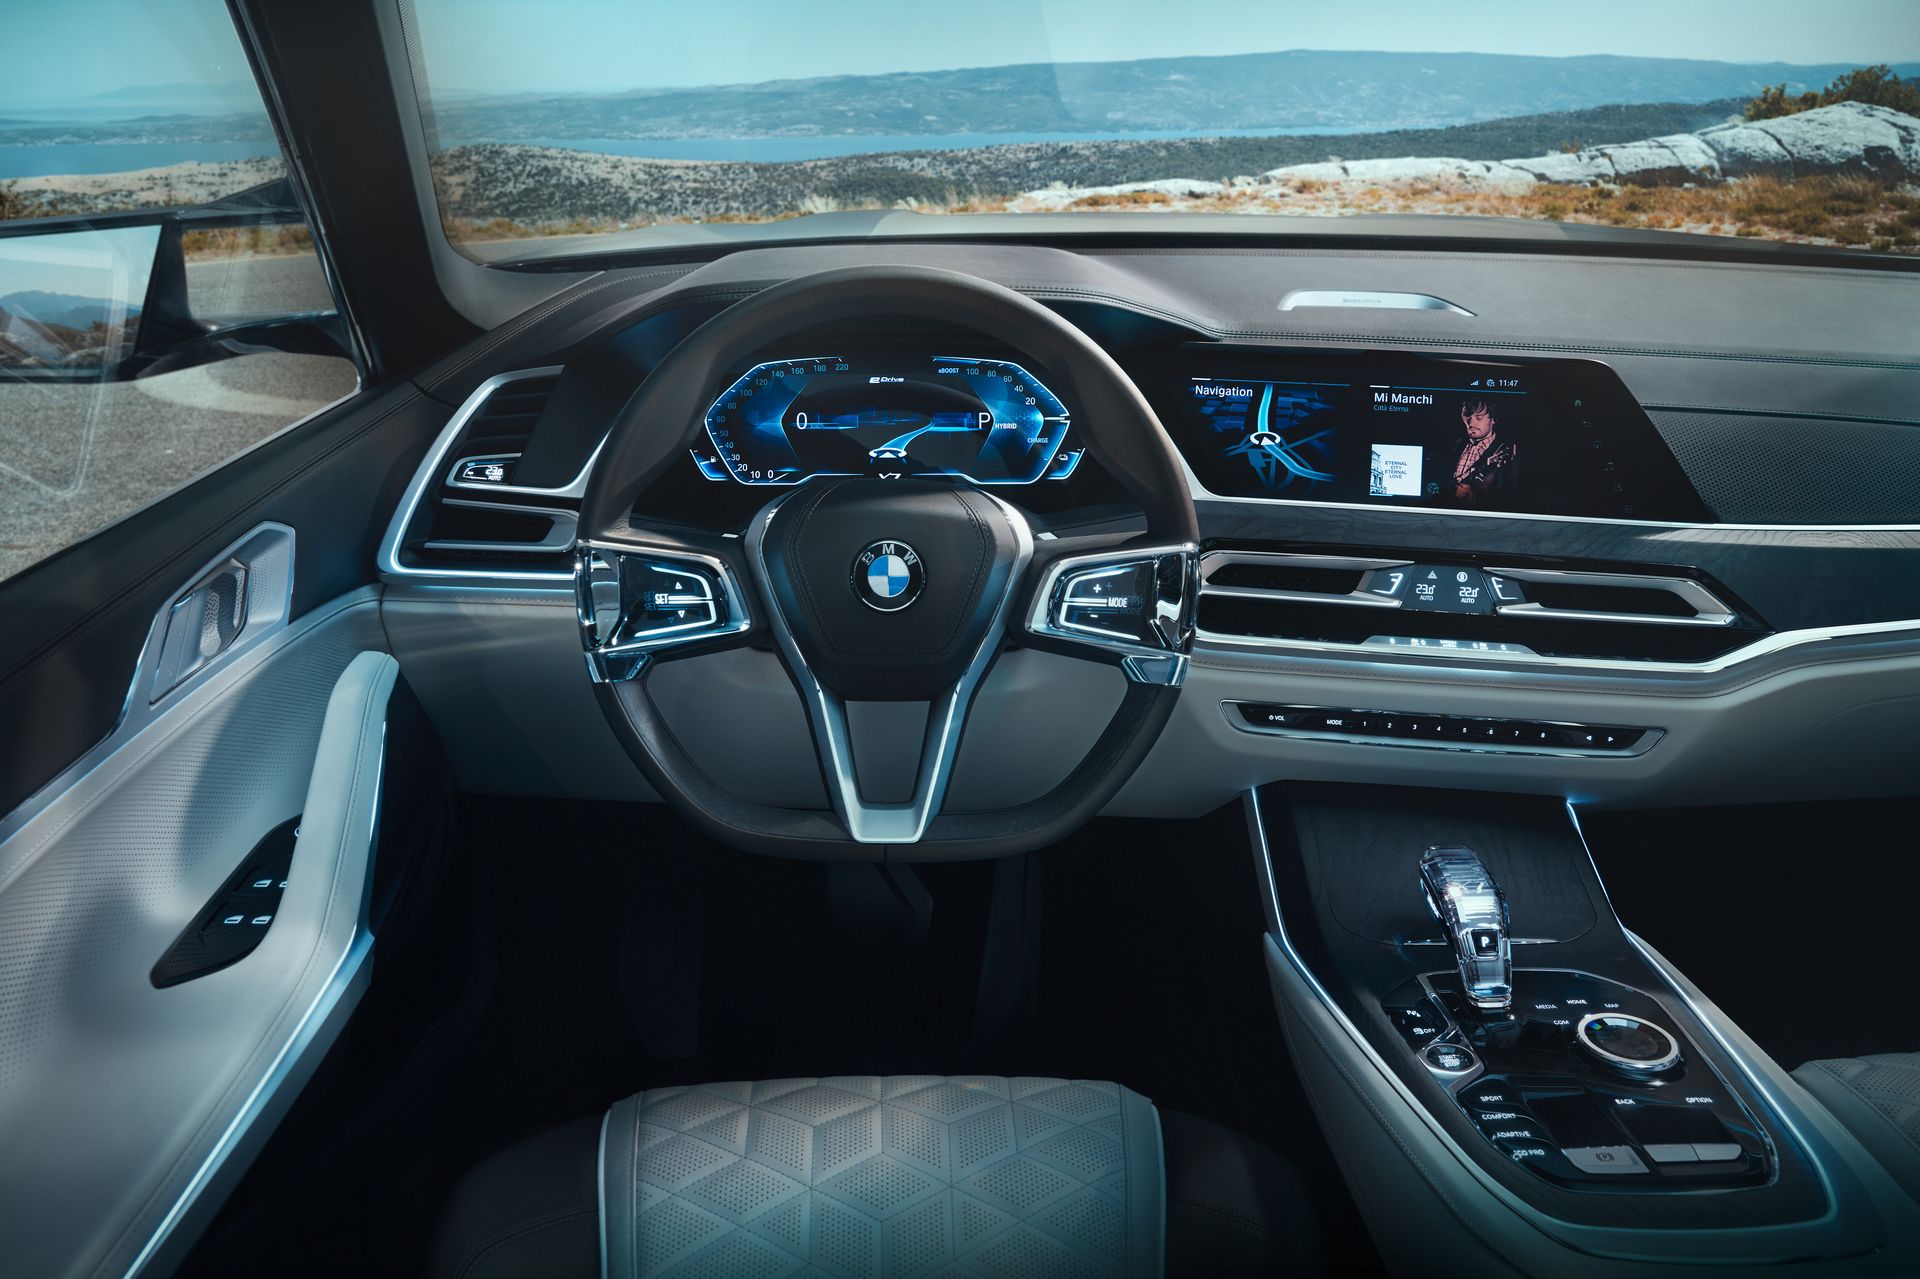 BMW X7 iPerformance interior